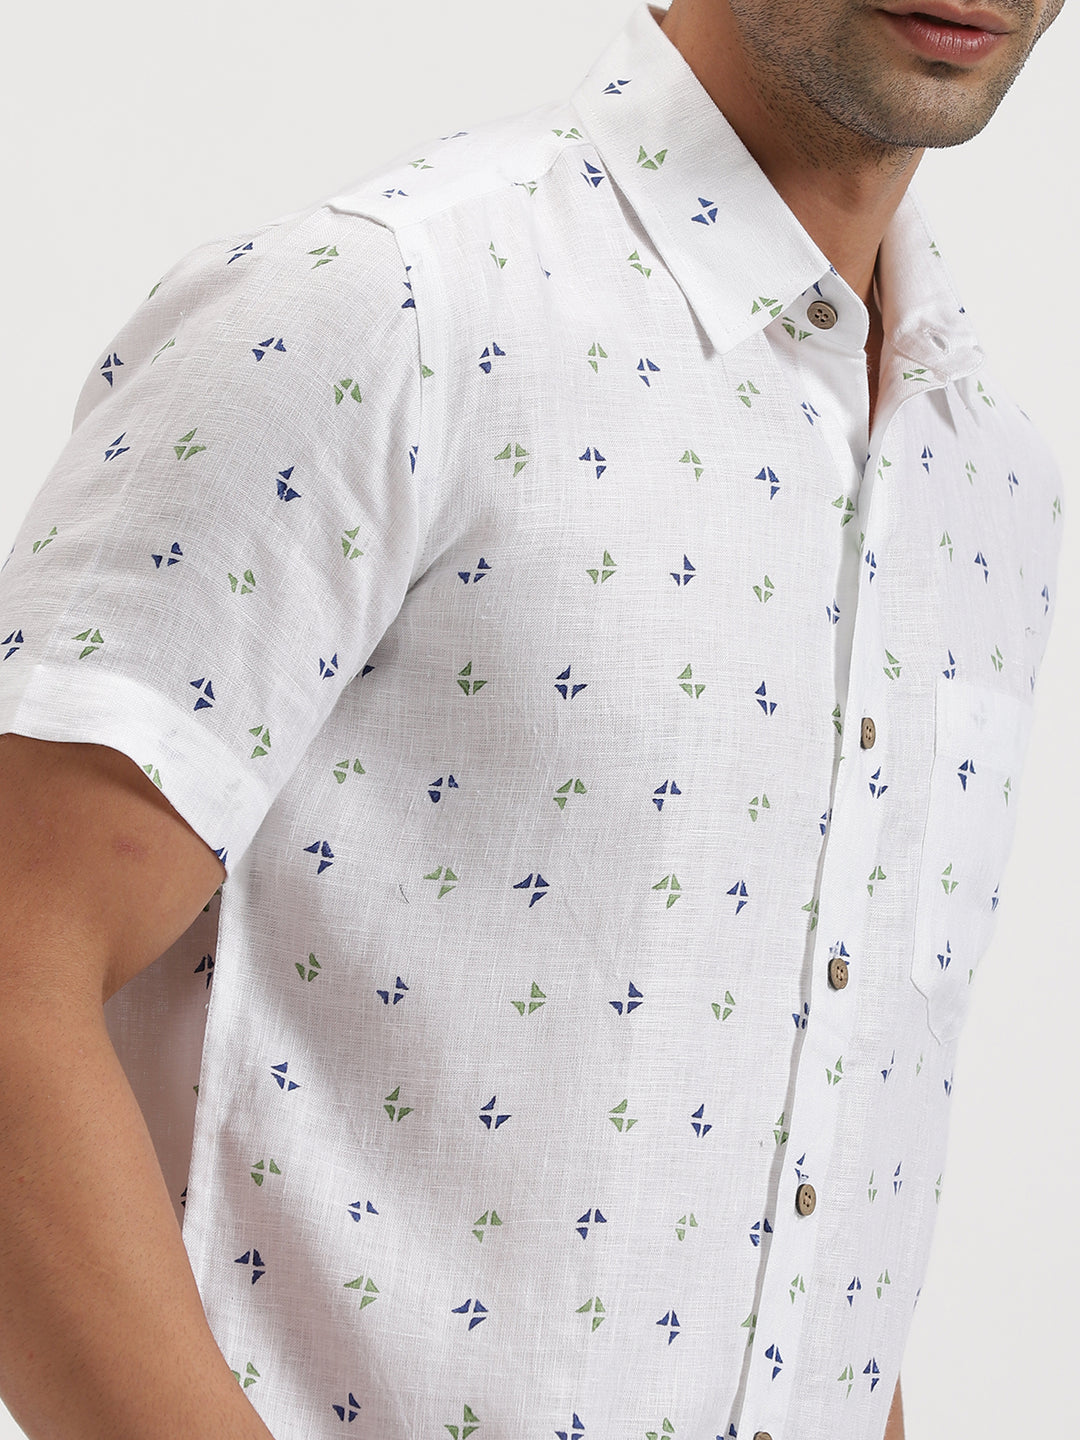 Elies - Pure Linen Block Printed Half Sleeve Shirt - Navy & Green